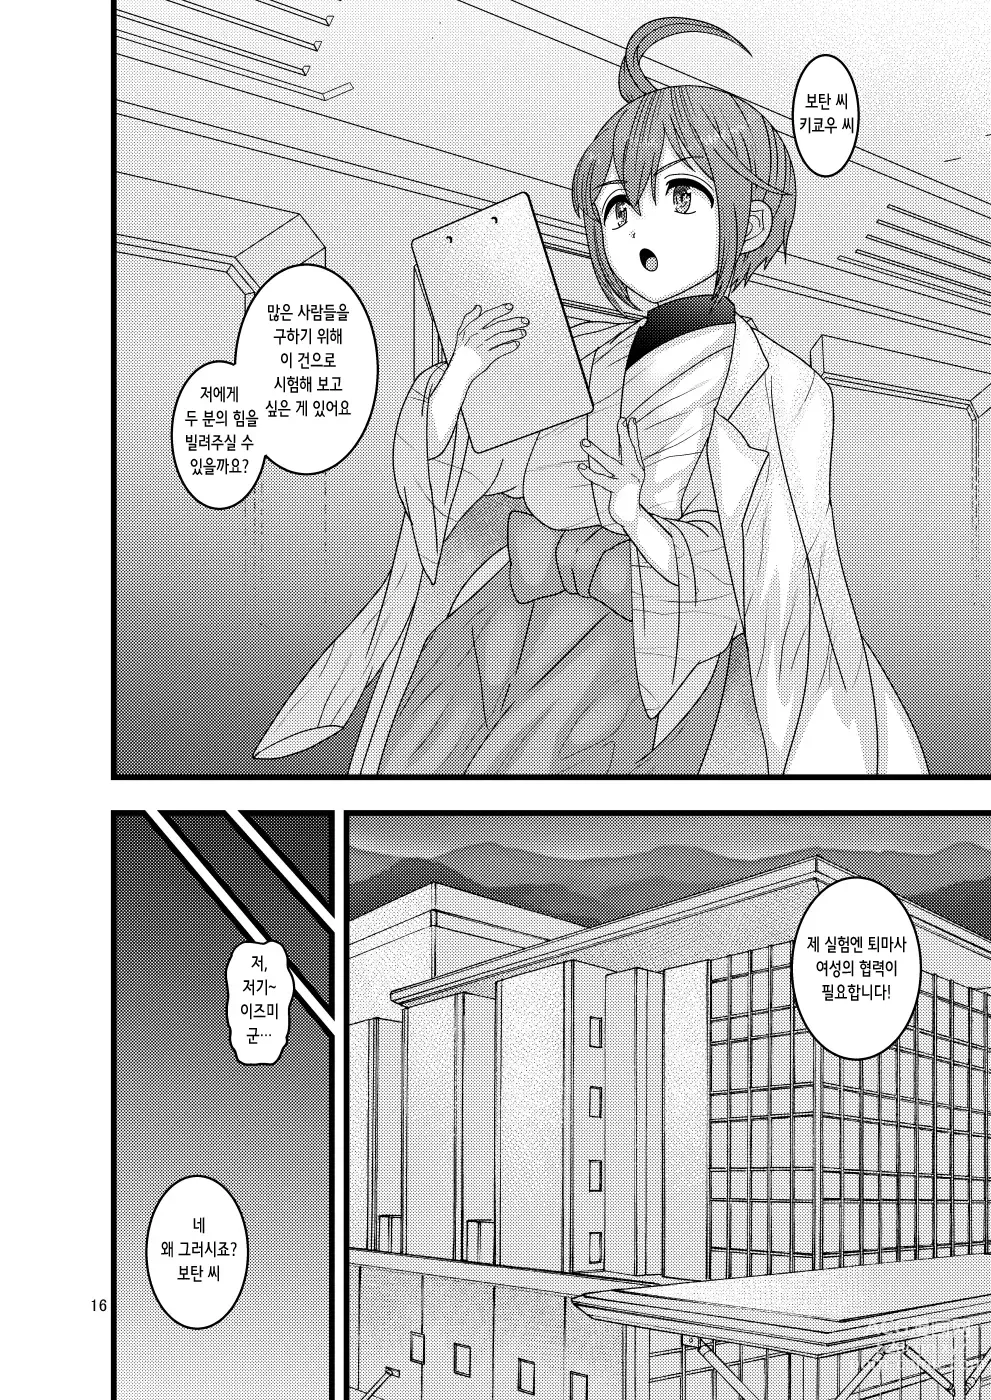 Page 17 of doujinshi 떨어지는 꽃 보탄과 키쿄우 편 2